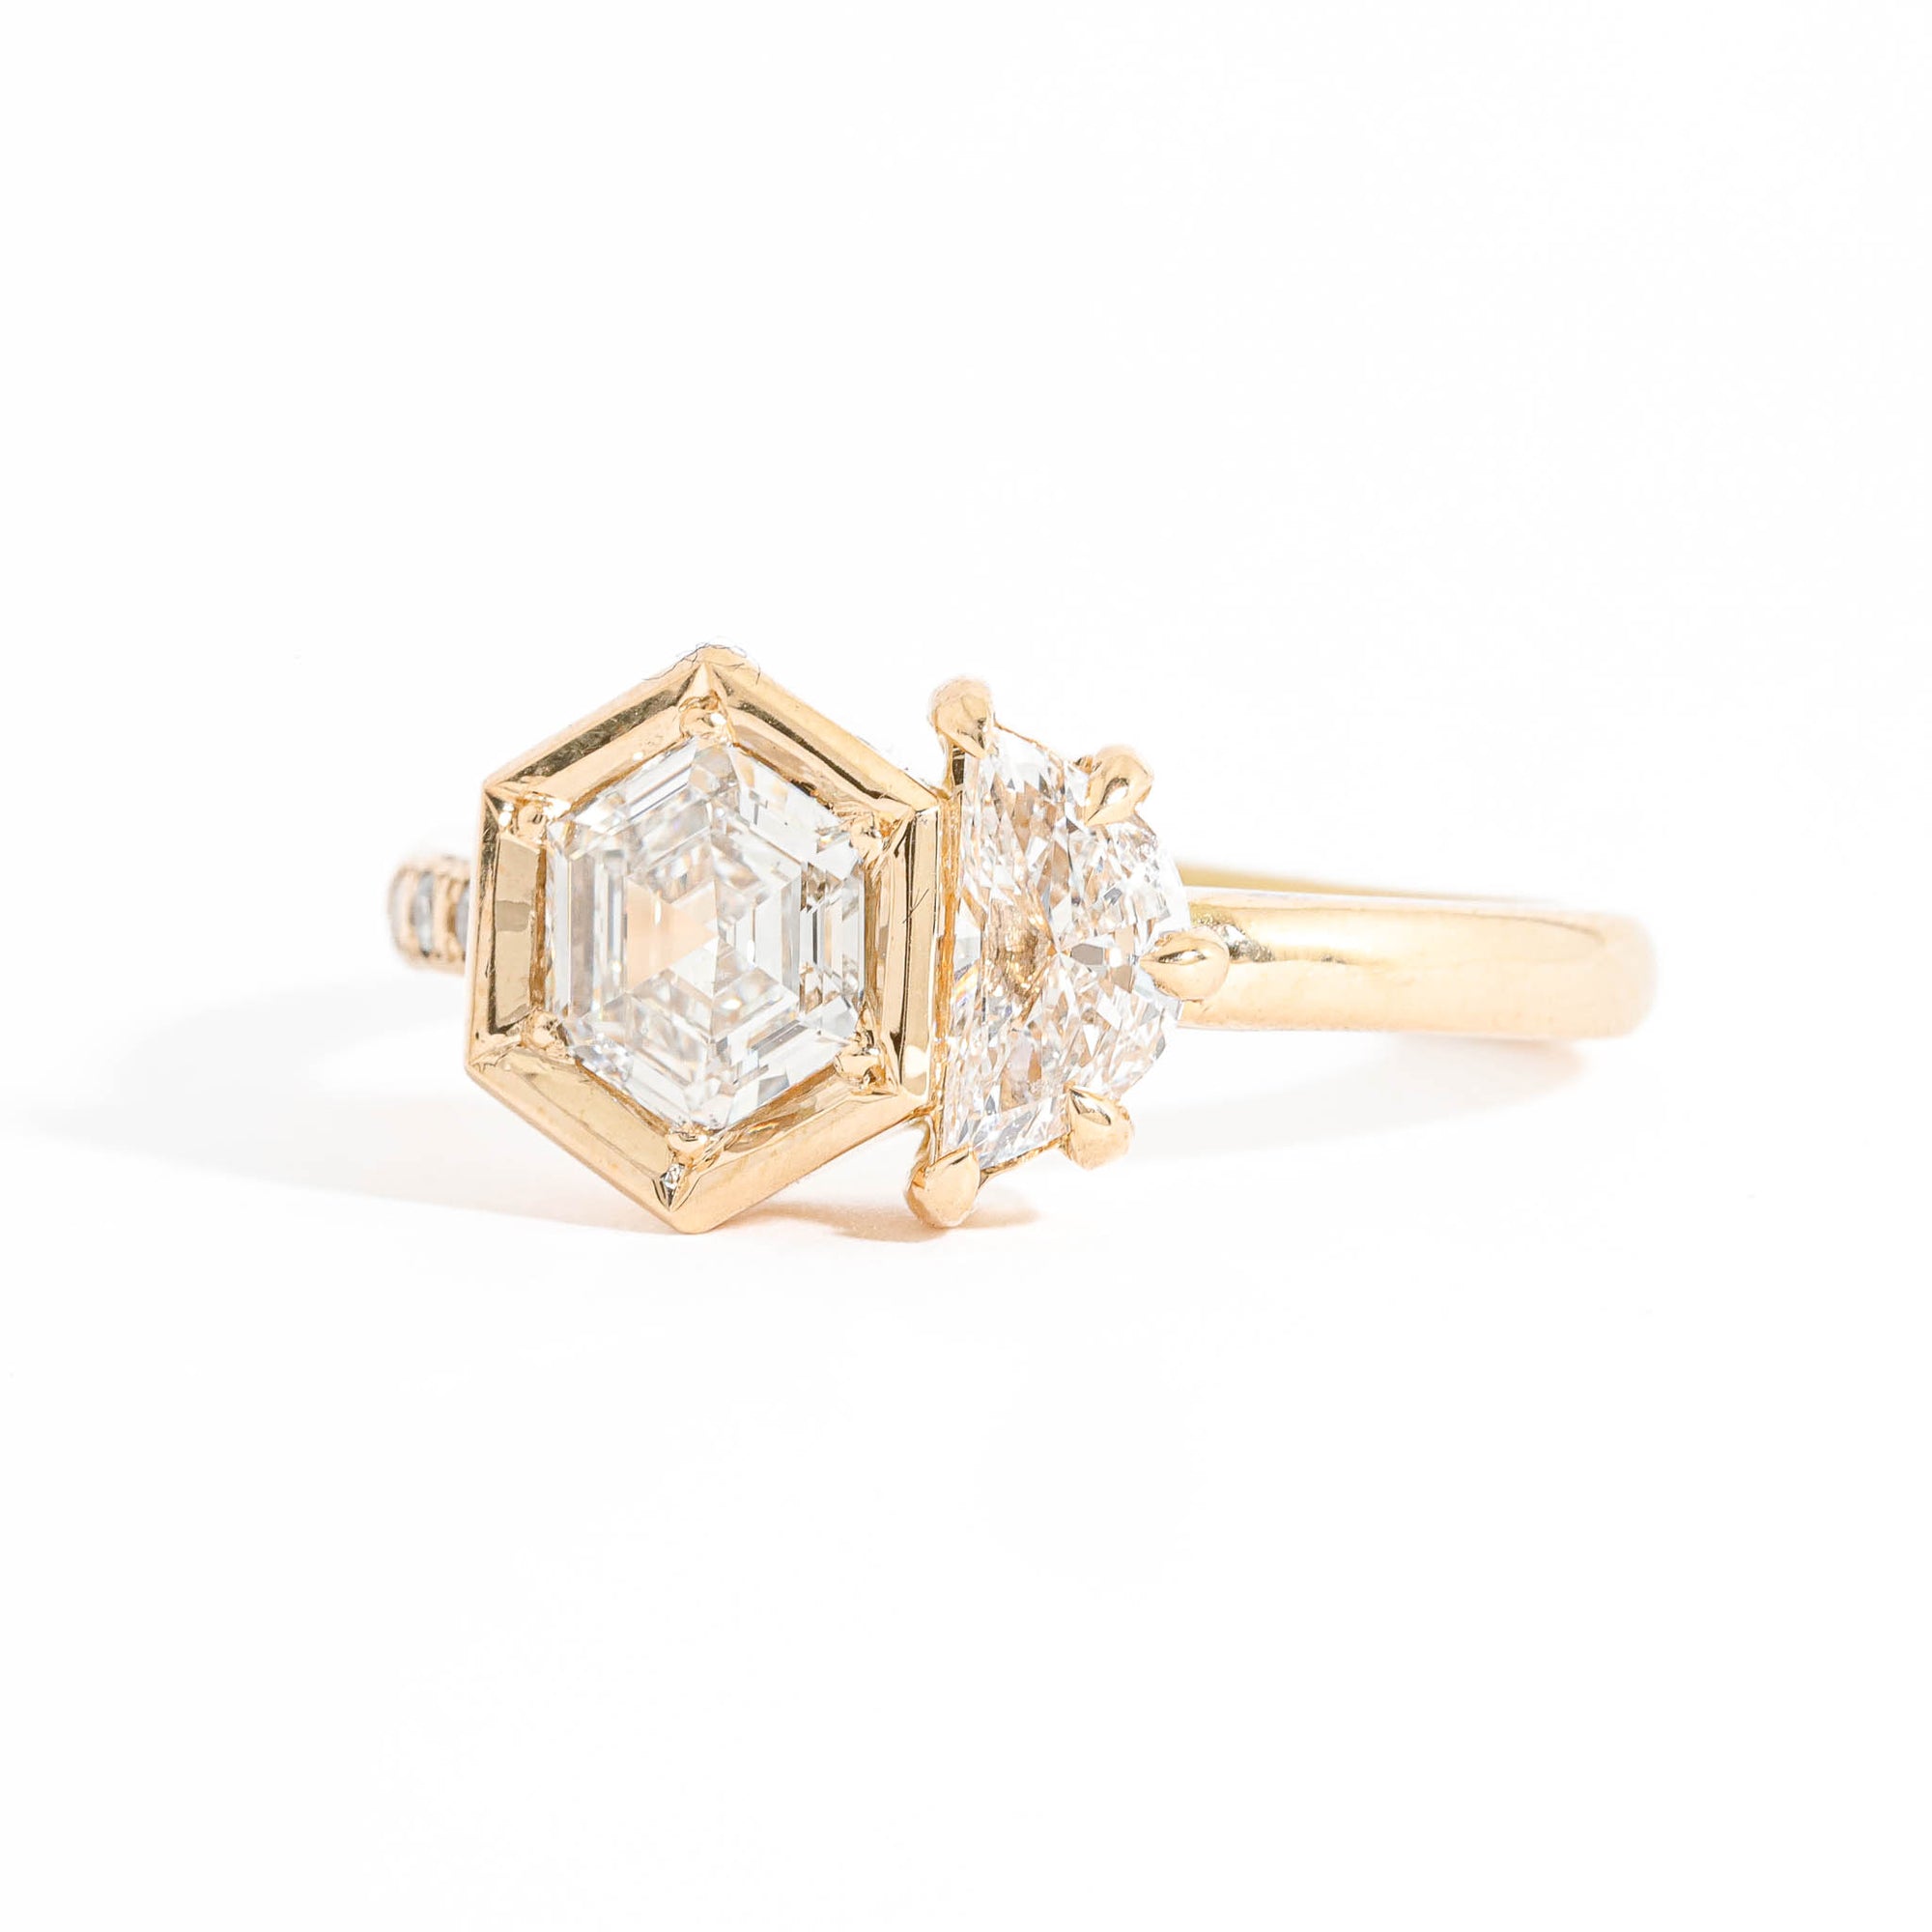 Hexagon Cut and Half Moon Cut Diamond Two Stone Ring in 18 Carat Yellow Gold